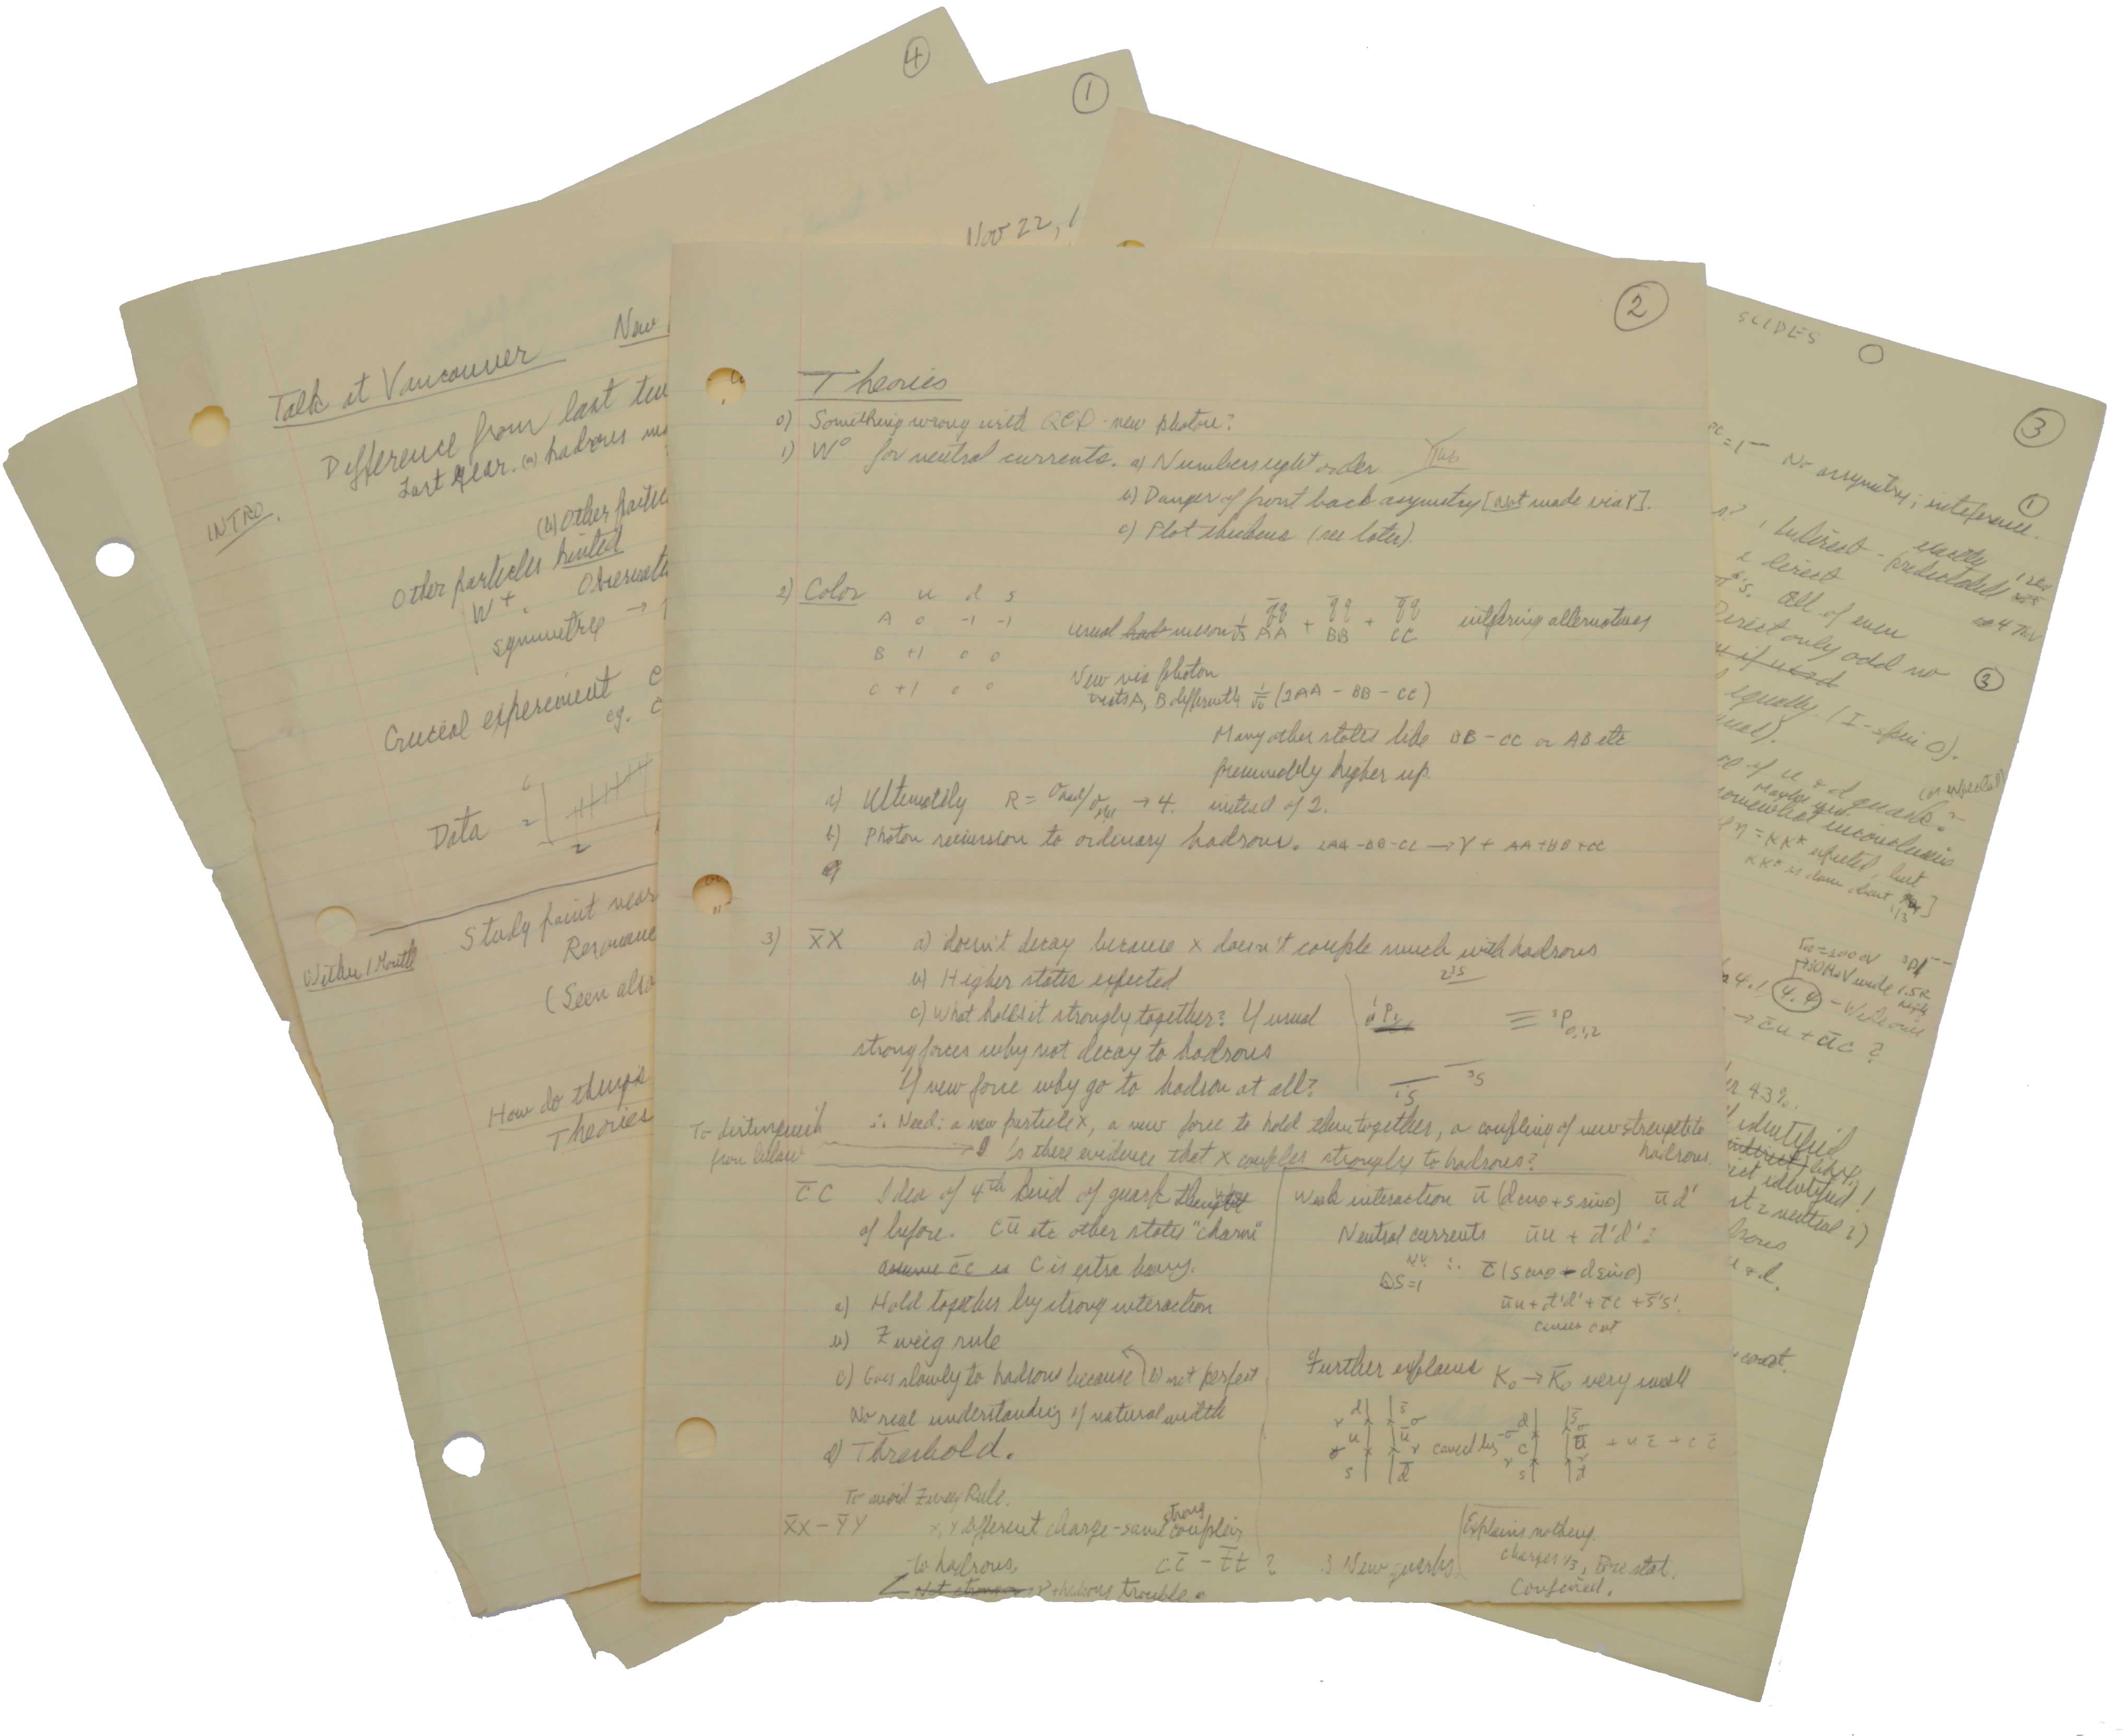 Item #4859 Autograph manuscript, unsigned, entitled ‘Talk at Vancouver New Particles etc.’ Vancouver, Canada, 22 November 1975. Richard Phillips FEYNMAN.